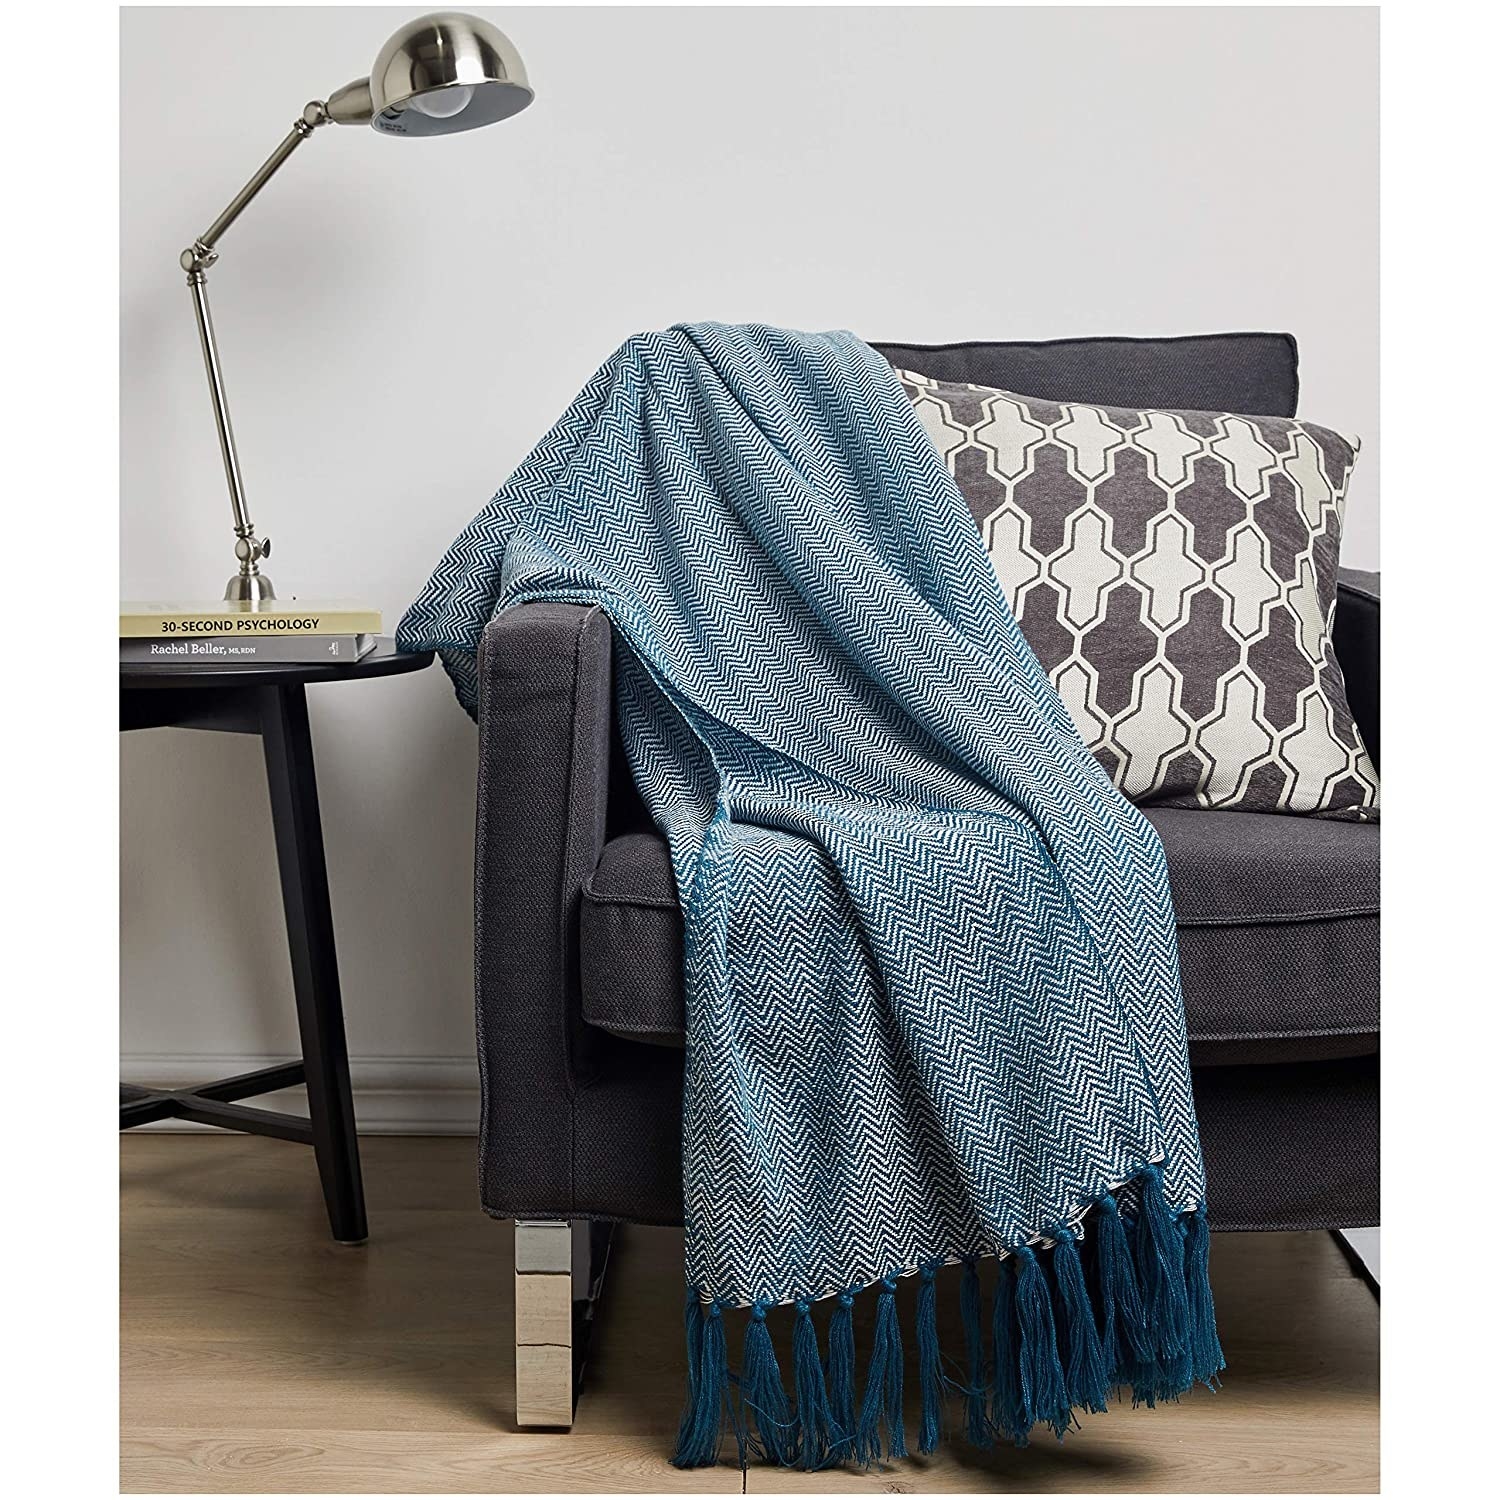 A blue chevron print throw blanket draped across a couch.